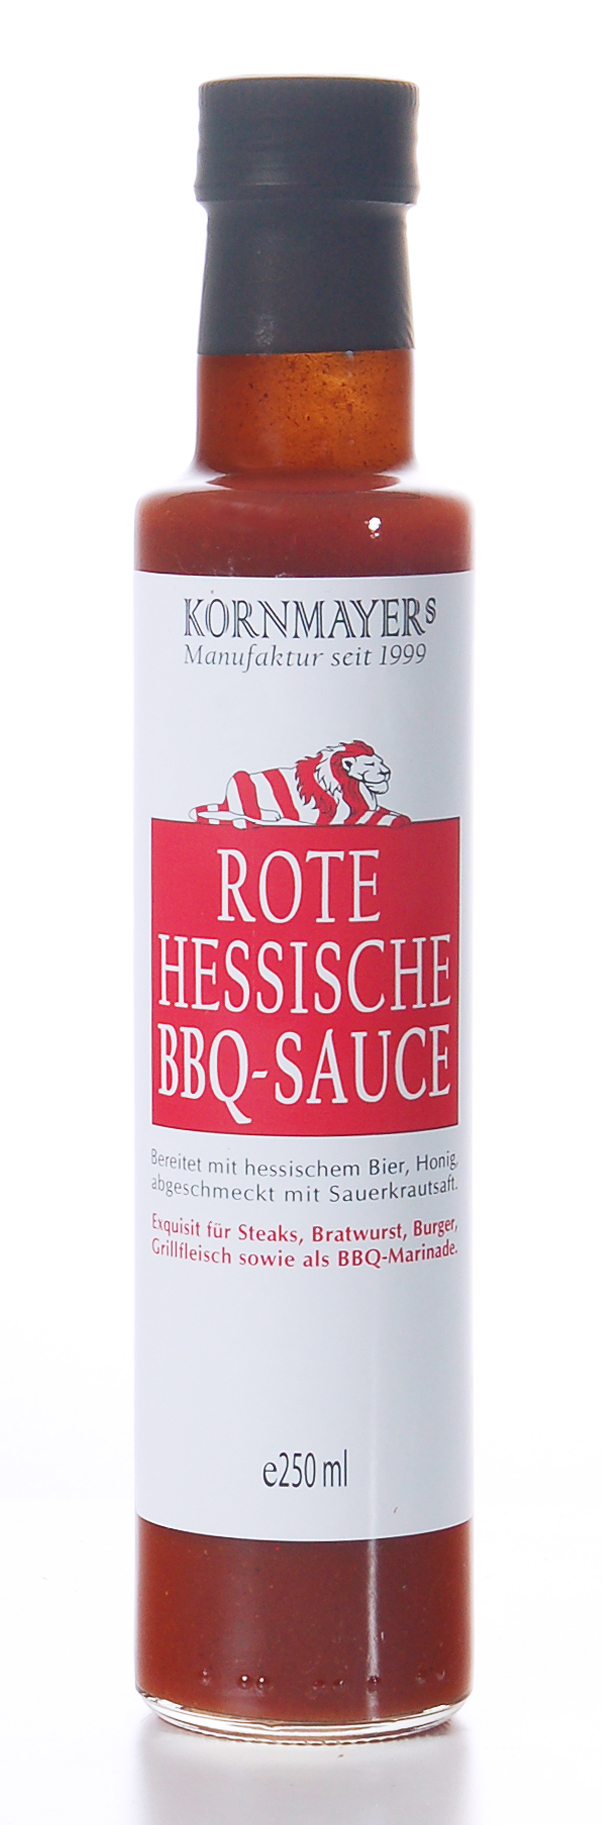 Rote Hessische BBQ-Sauce